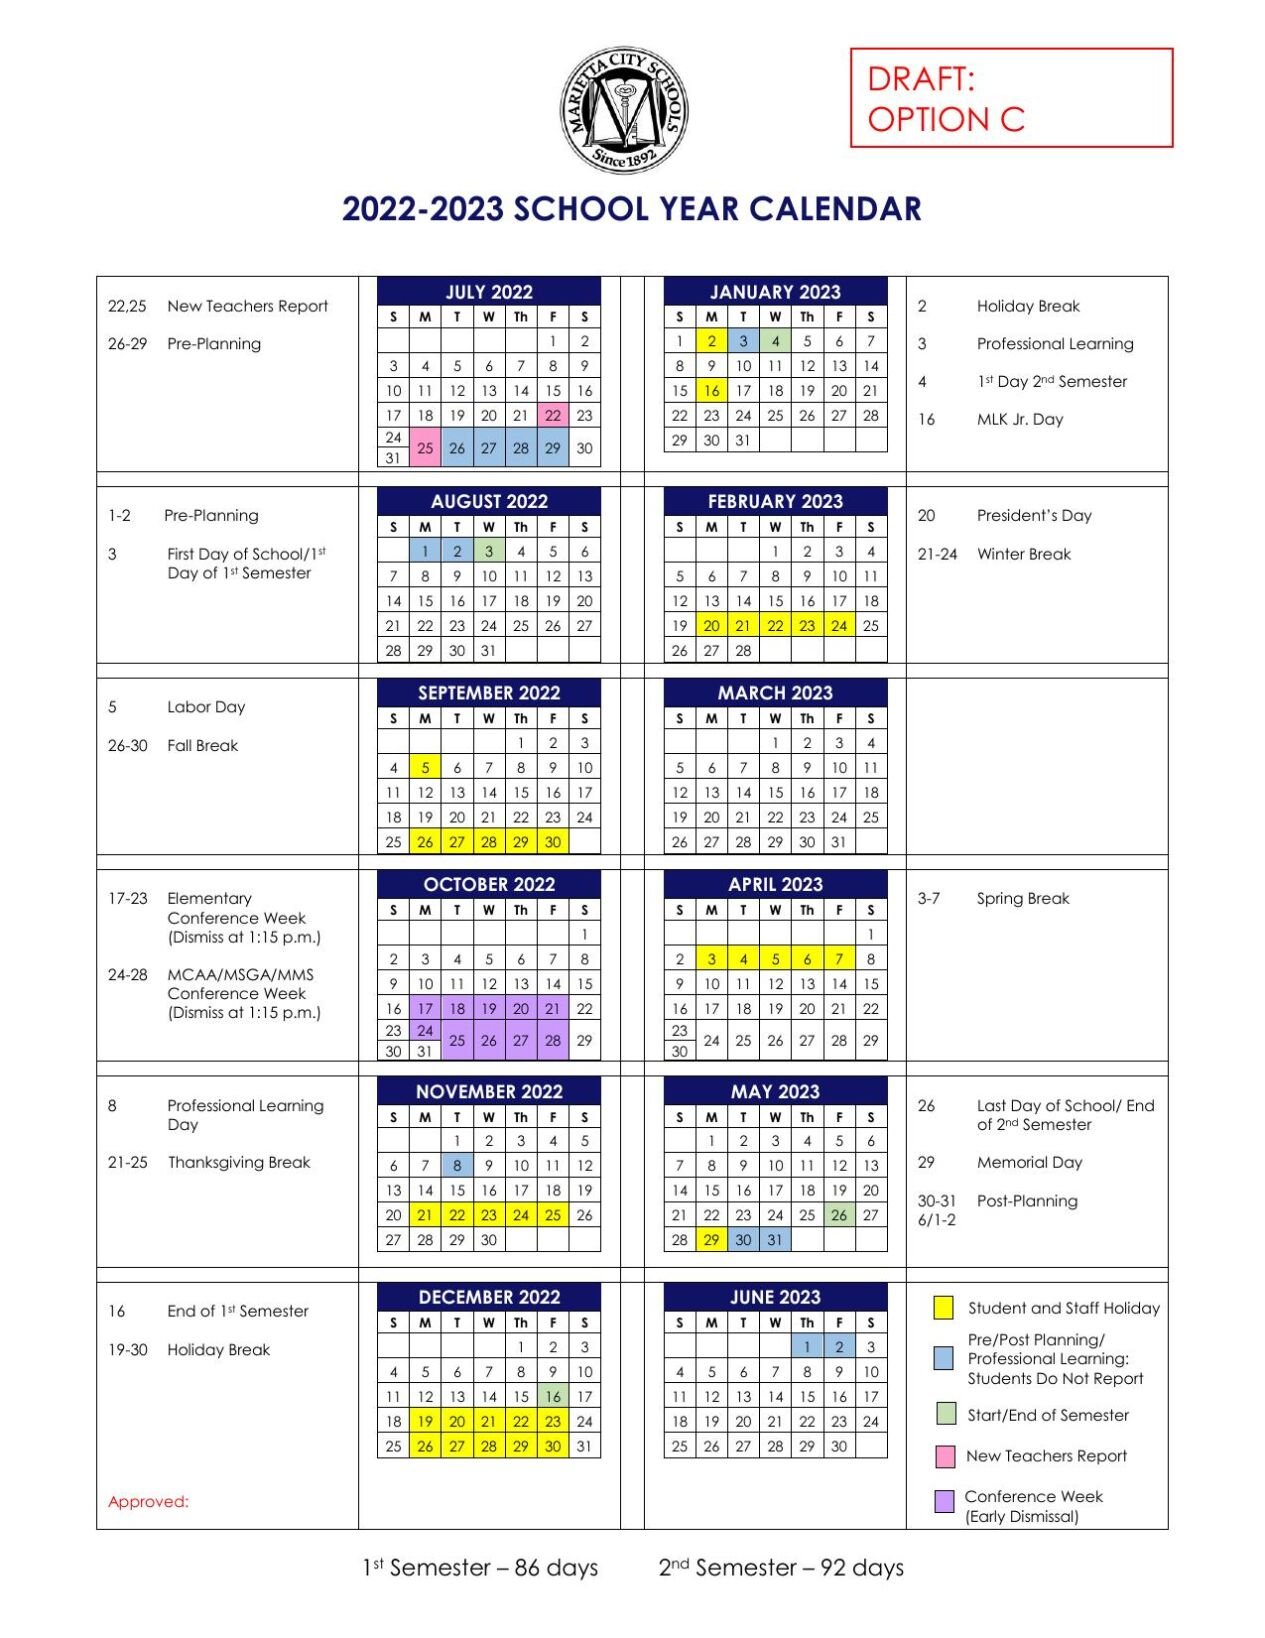 Ohio State Academic Calendar 2022 23 2022-23 Marietta Schools Calendar Option C | | Mdjonline.com